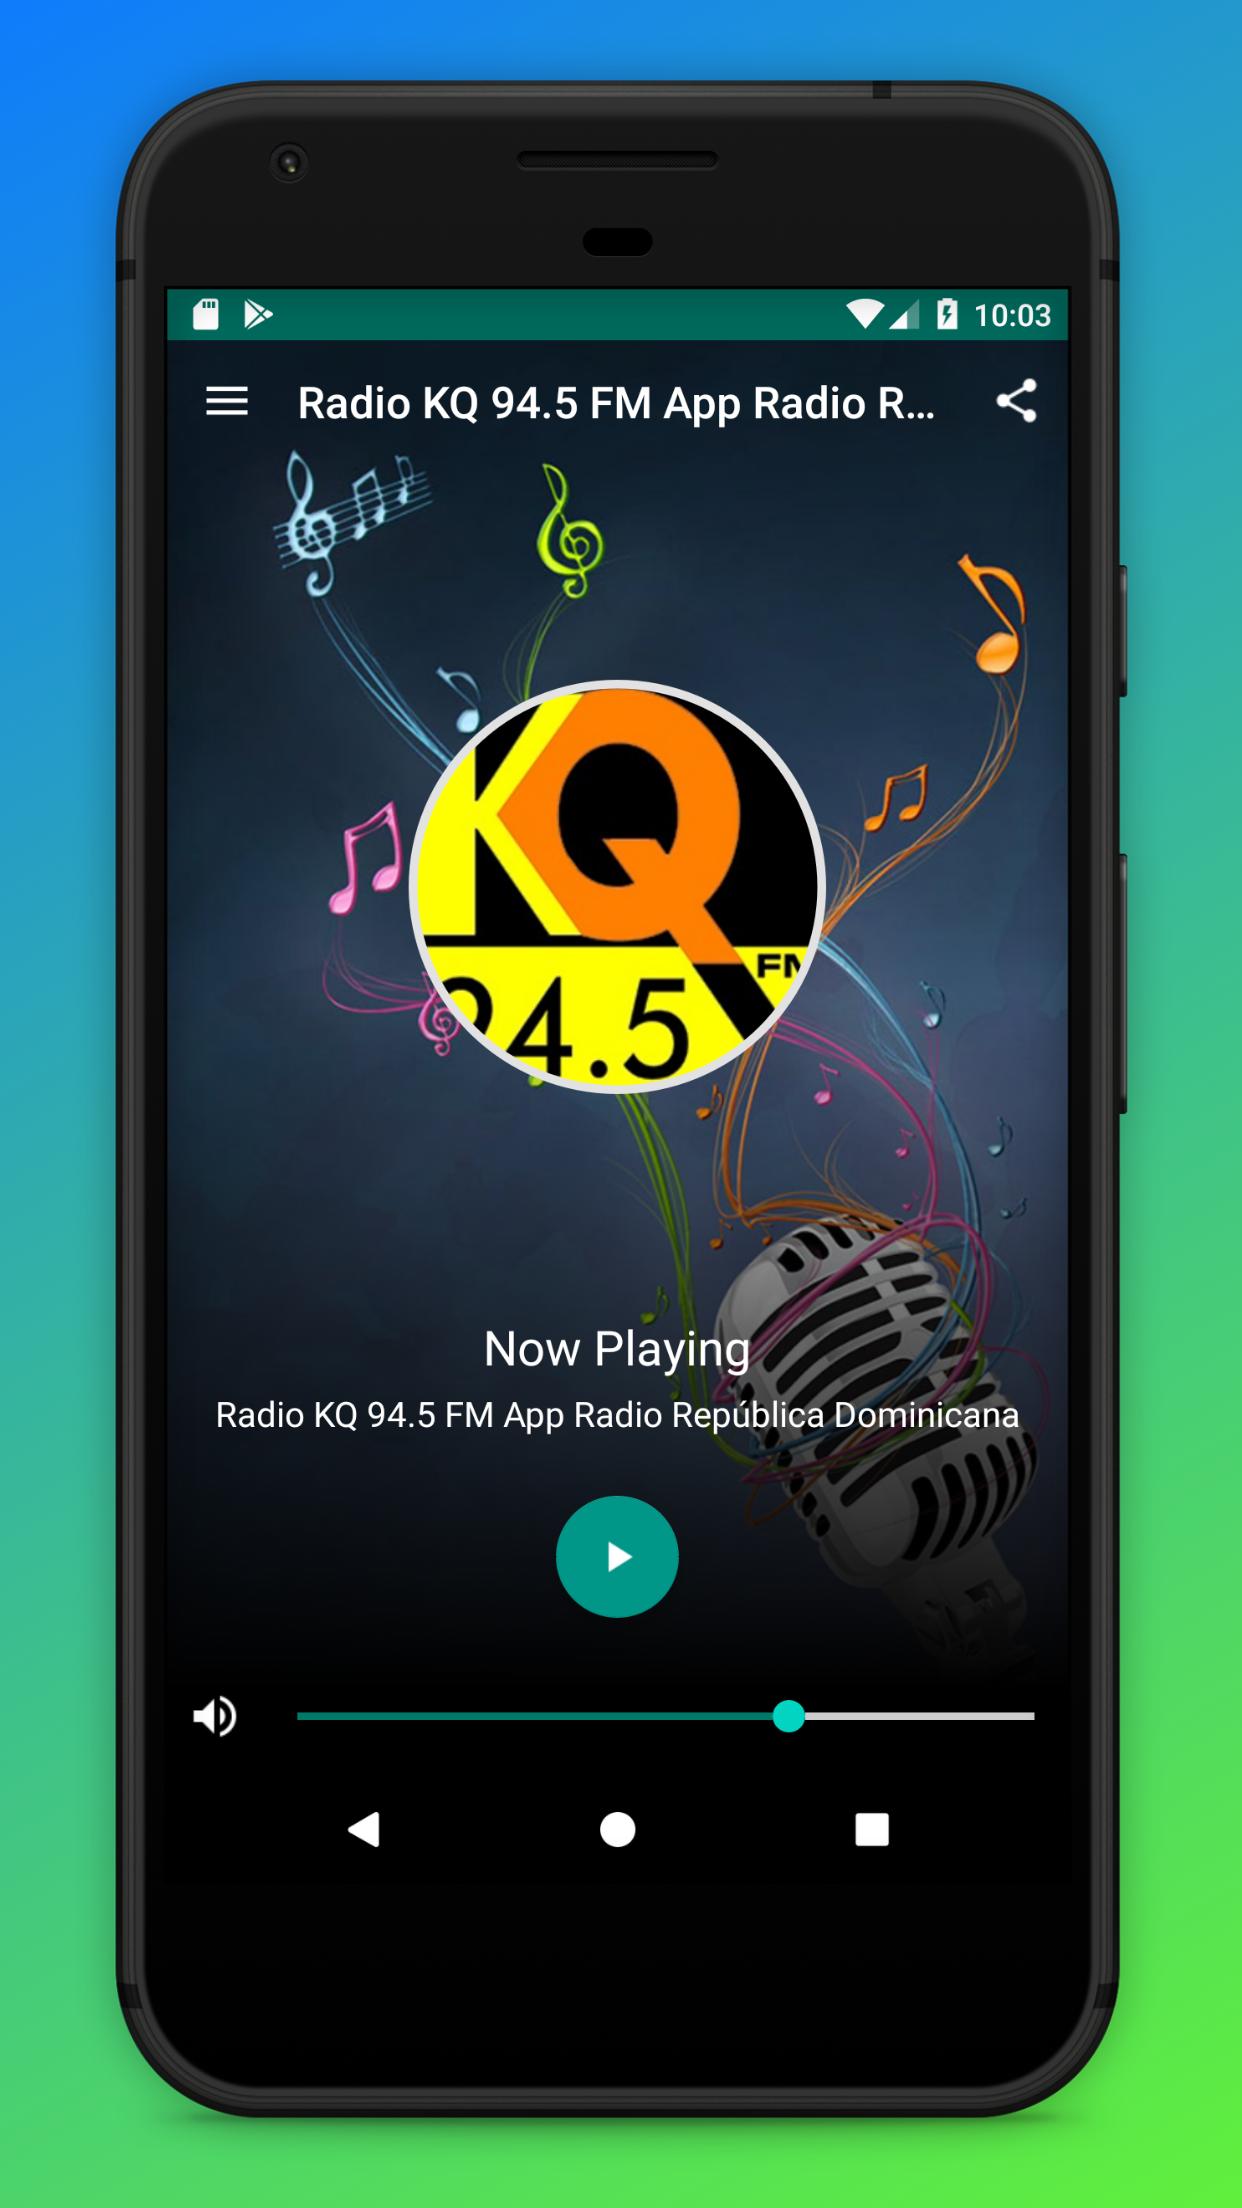 Radio KQ 94.5 FM App Radio República Dominicana APK für Android  herunterladen